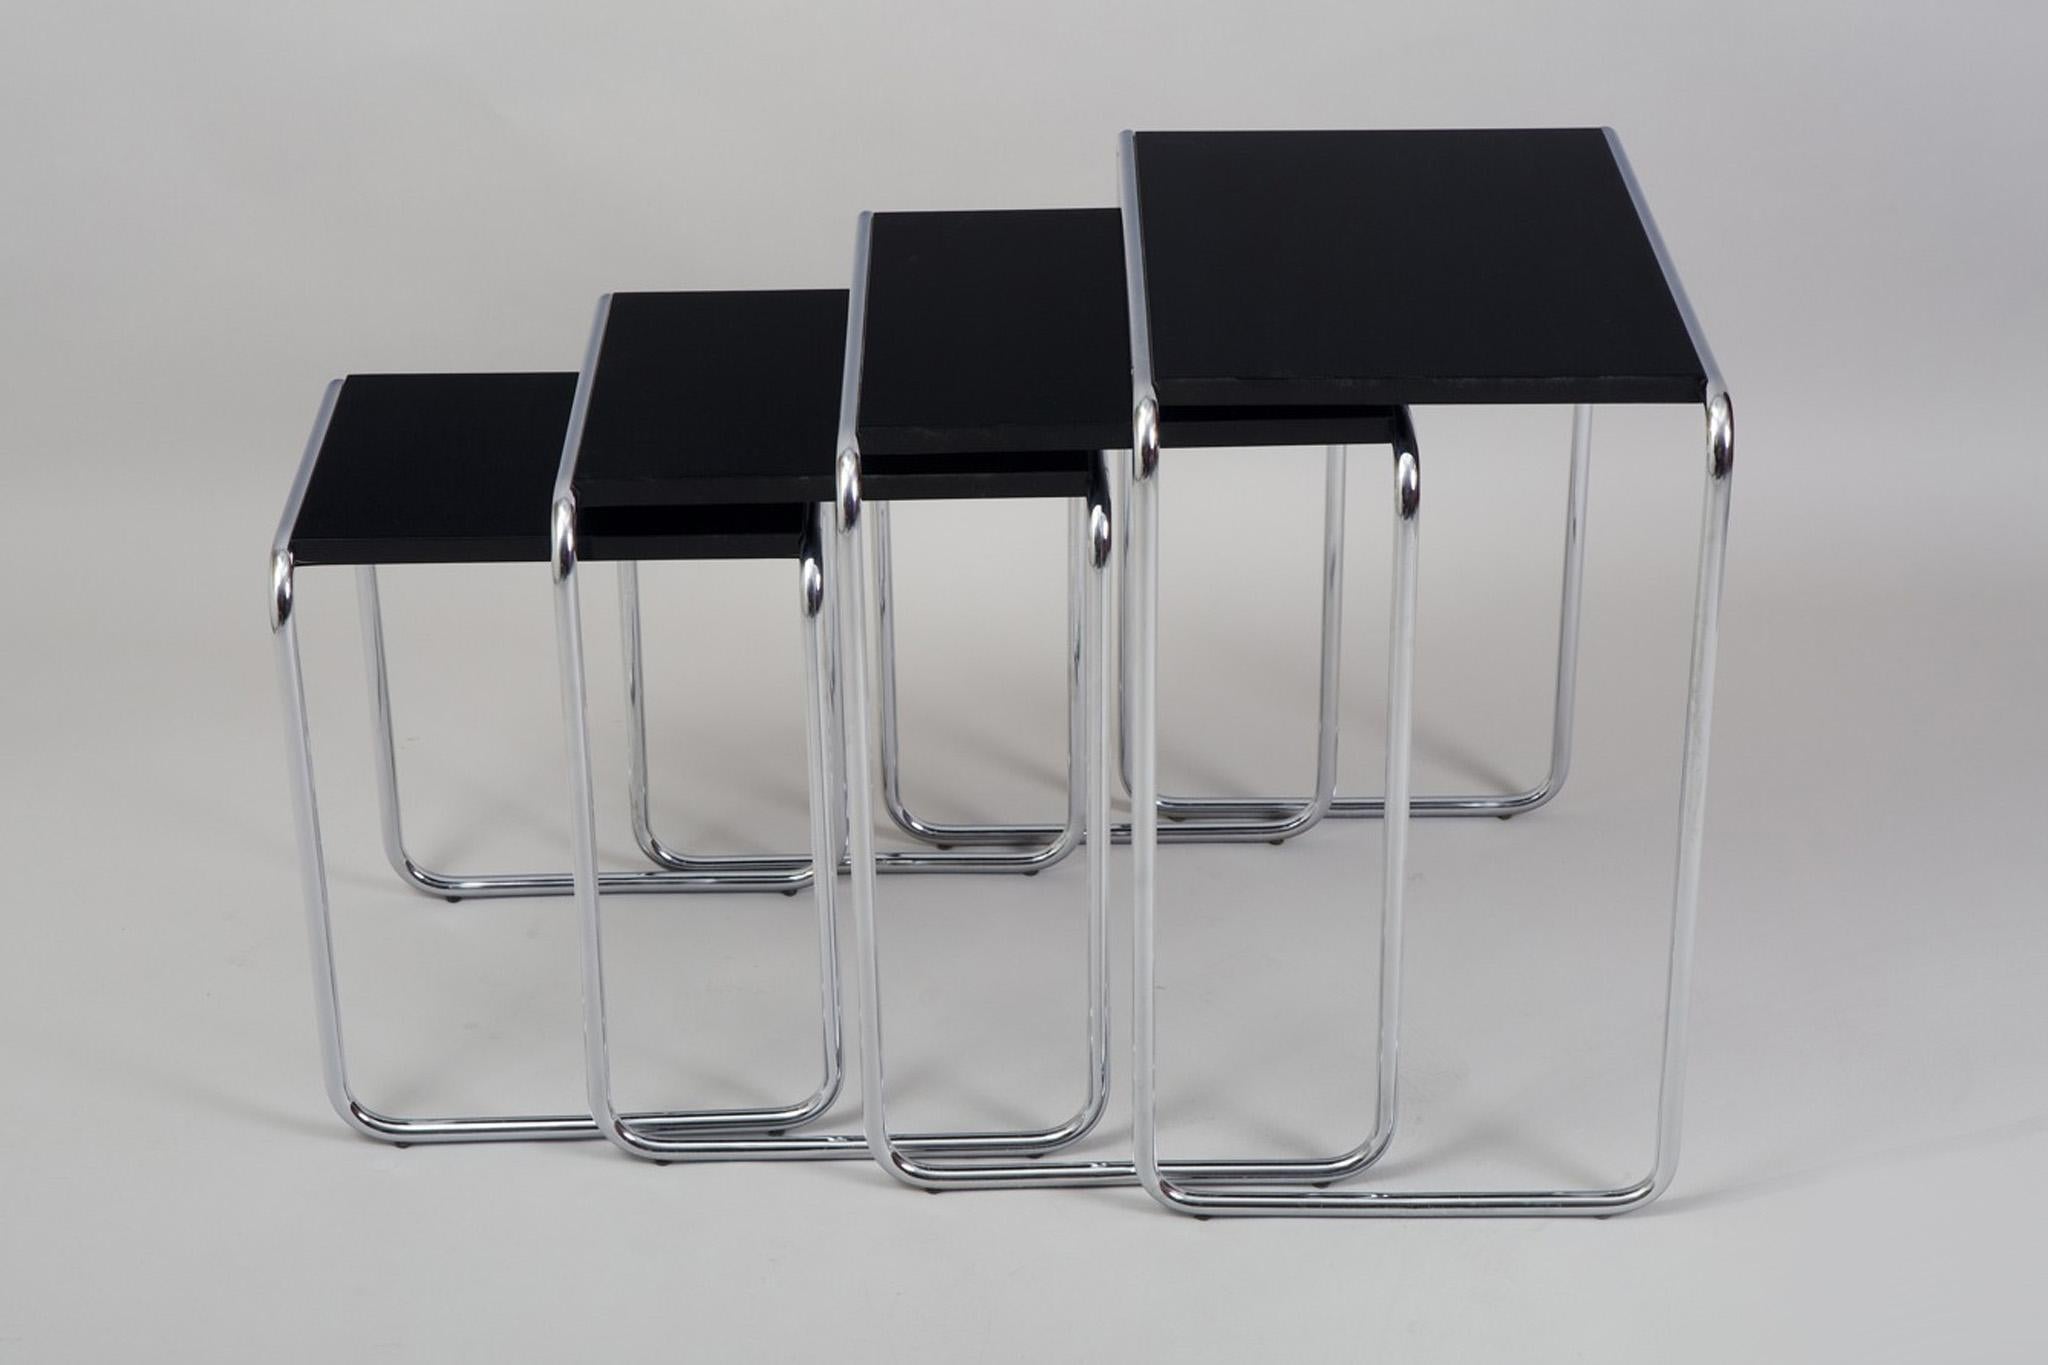 Bauhaus Fully Restored Black Nest Tables Made in the 1950s by Kovona, Czech Origin For Sale